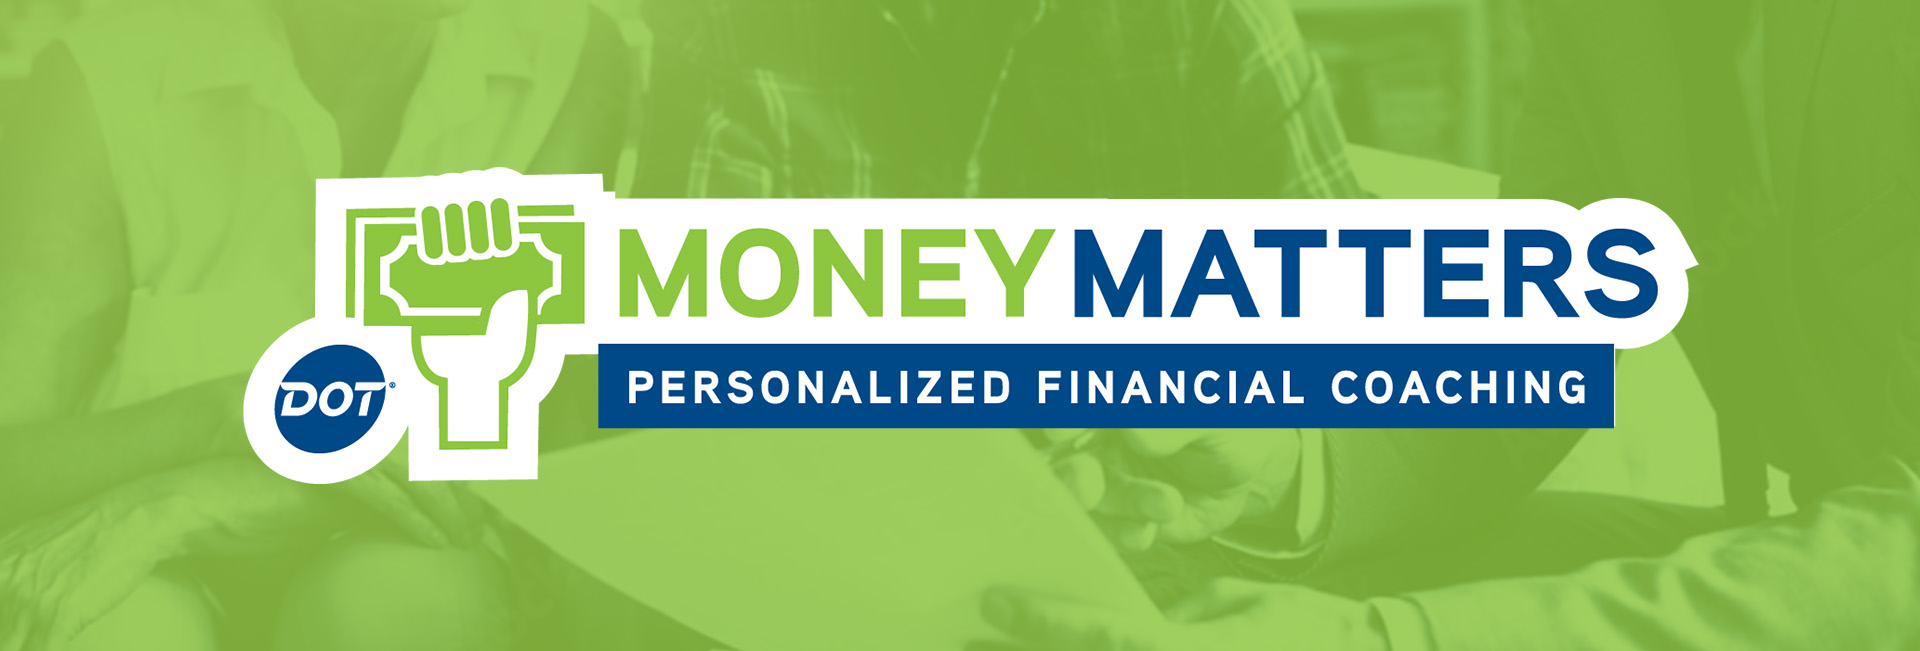 Money Matters personalized financial coaching